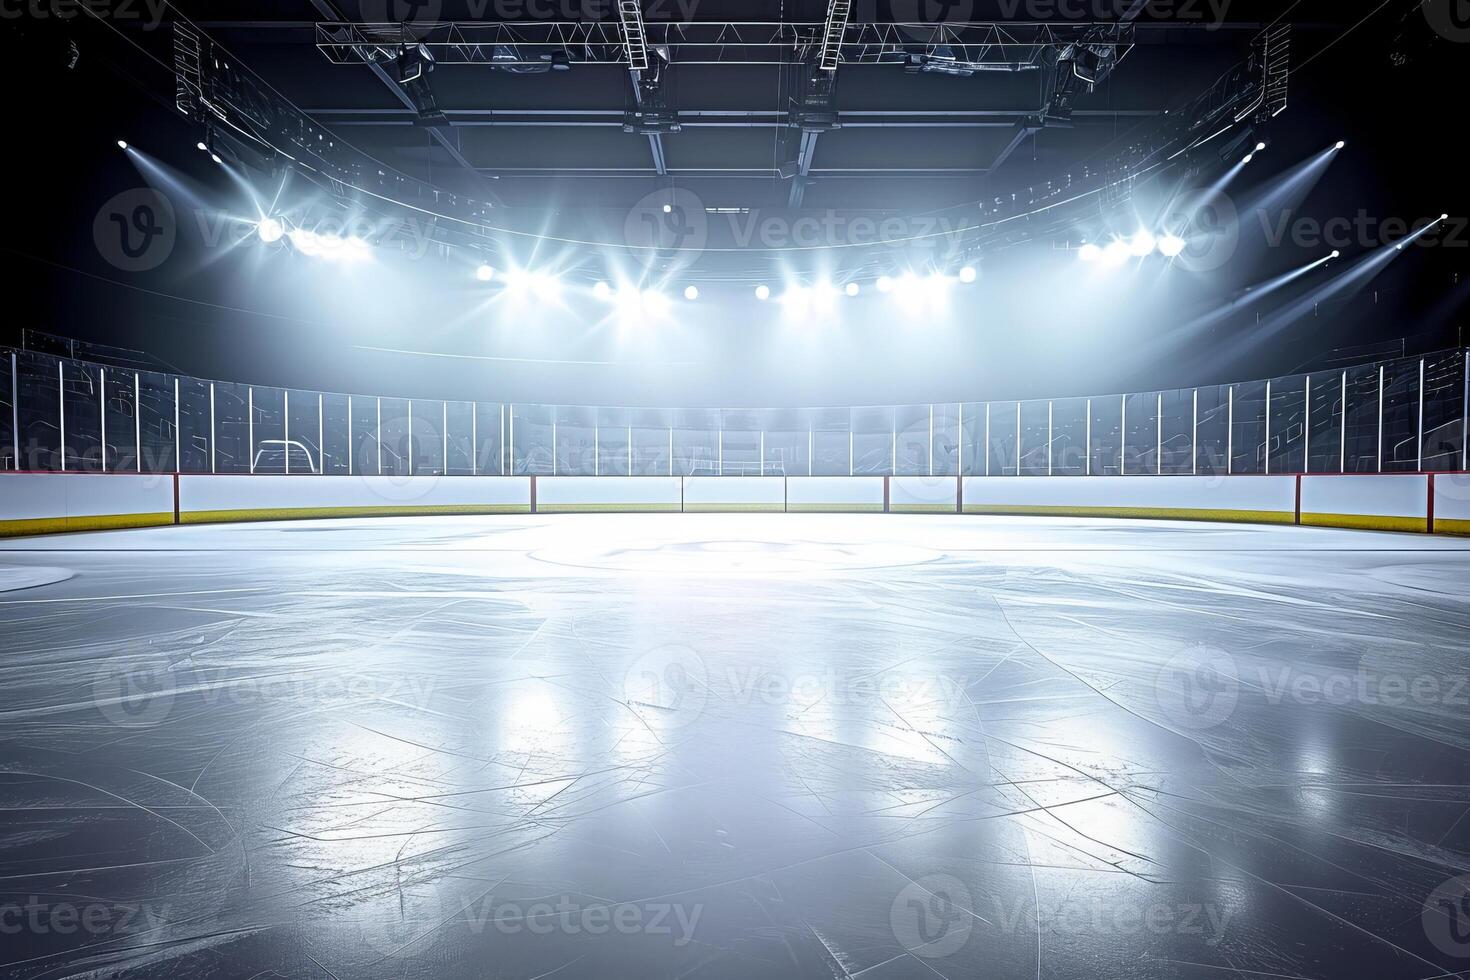 AI generated Snow and ice background stadium empty ice rink illuminated by spotlights photo